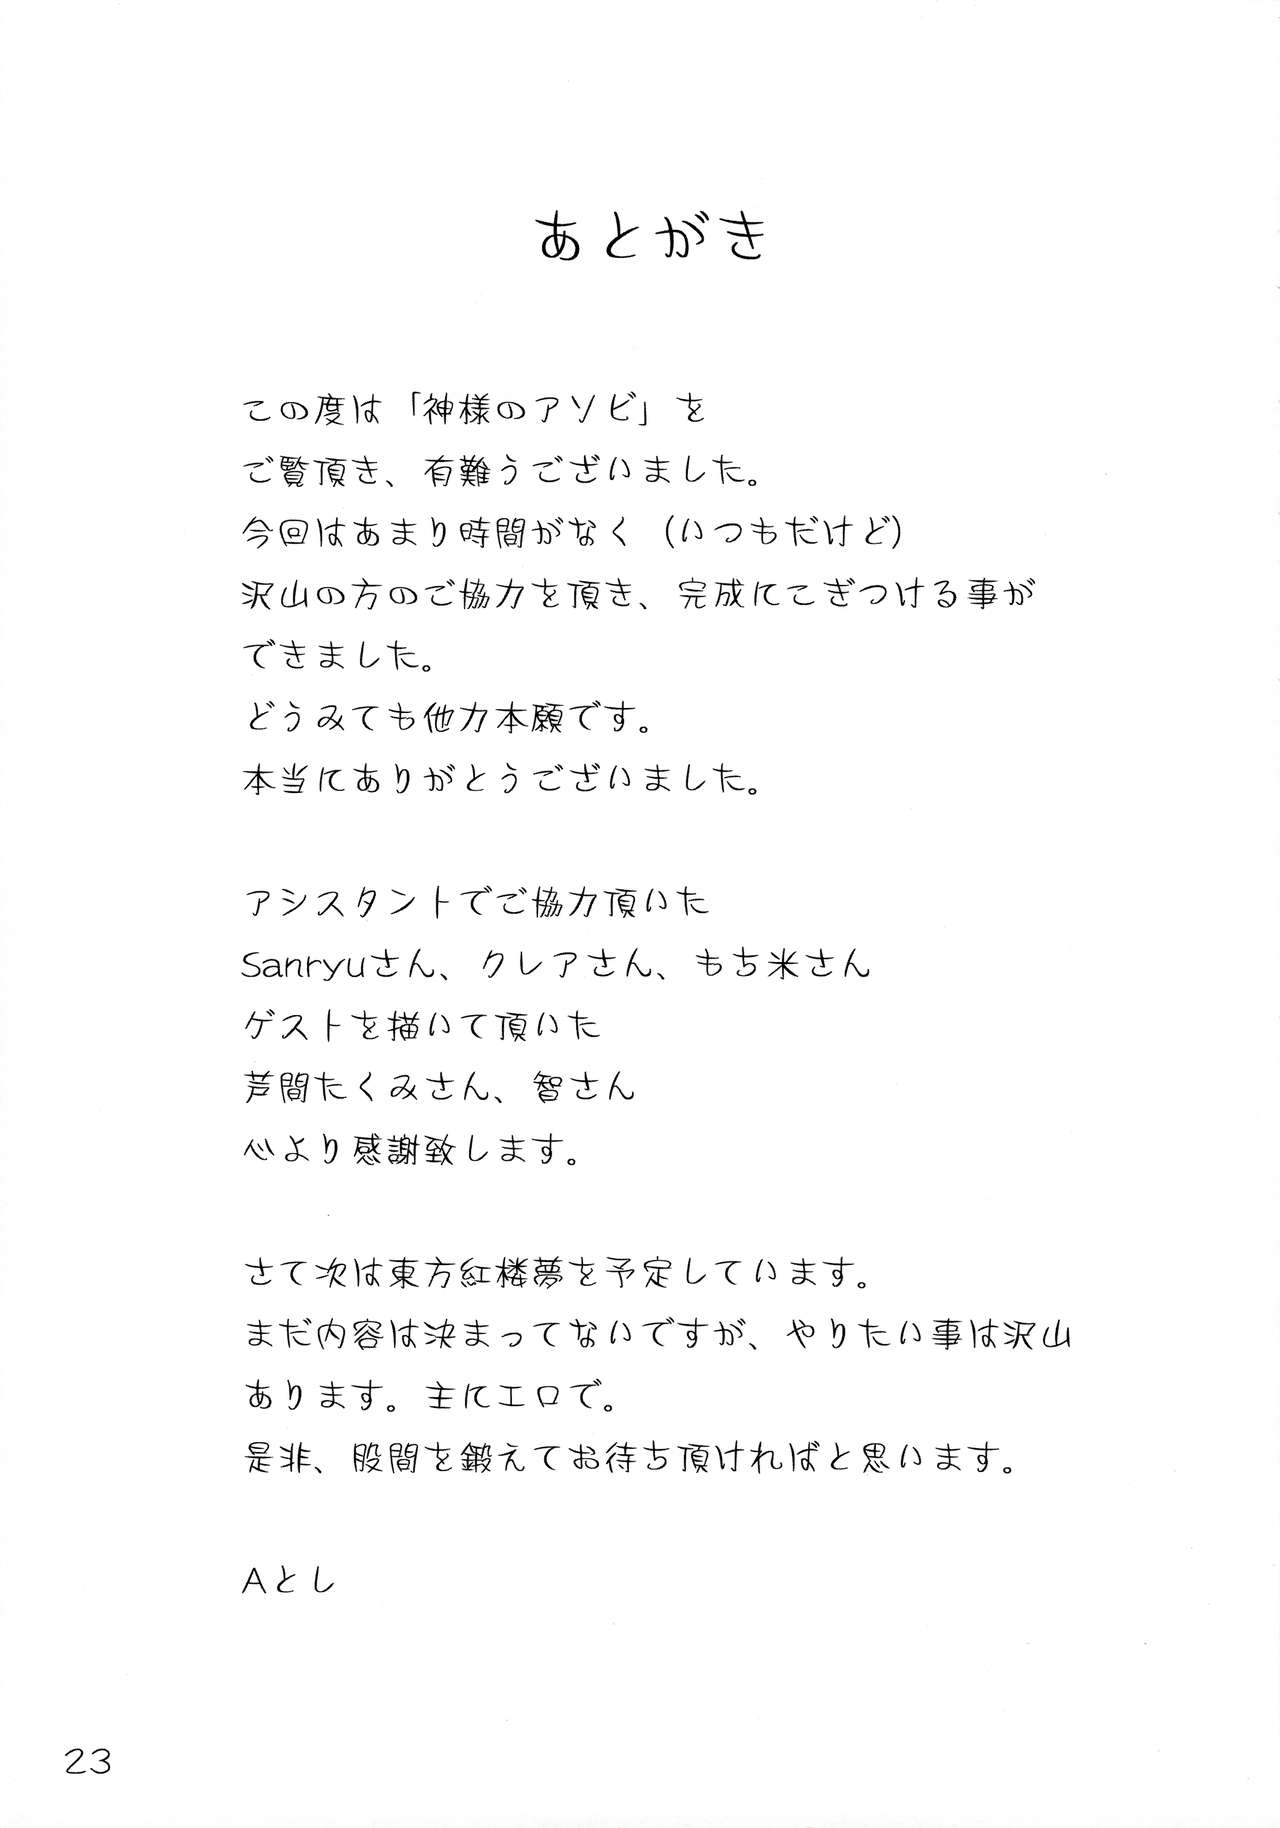 (Reitaisai SP2) [KOTI (A Toshi)] Kami-sama no Asobi (Touhou Project) (例大祭SP2) [KOTI (Aとし)] 神様のアソビ (東方Project)